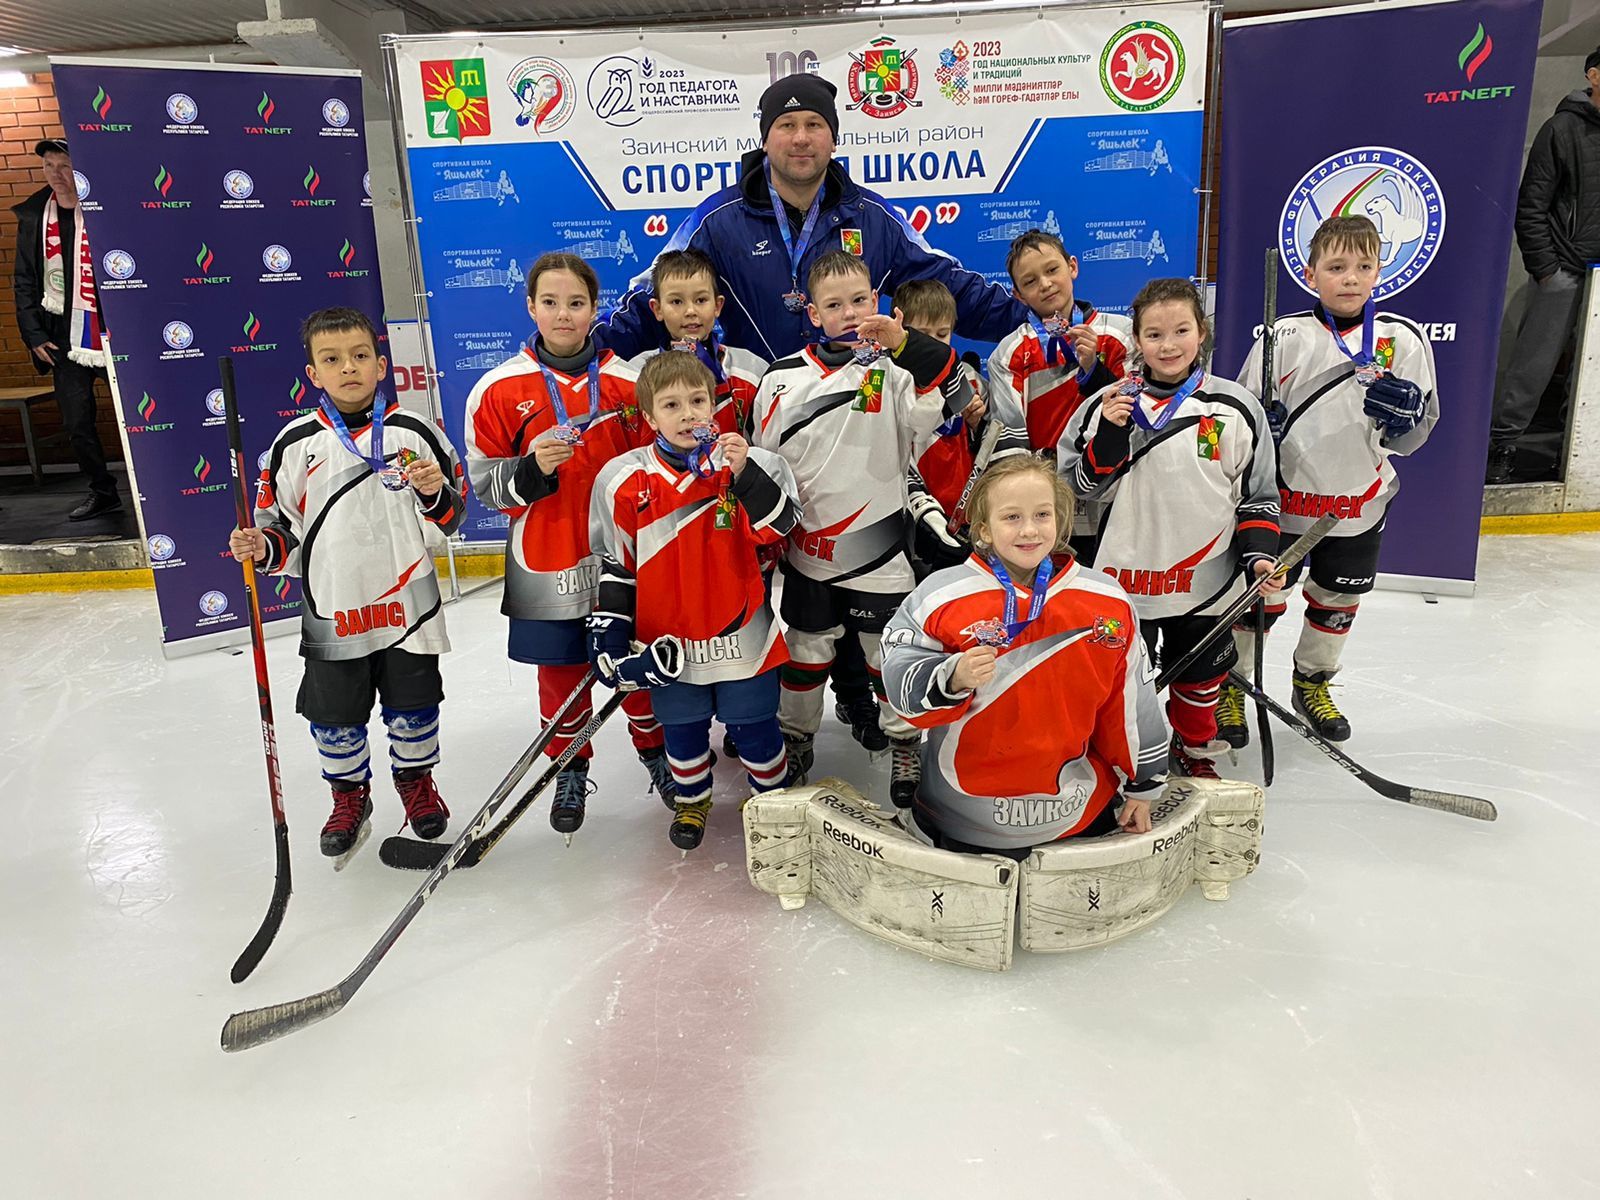 Зәйдә 2015 елгы балалар командалары арасында хоккей фестивале узды